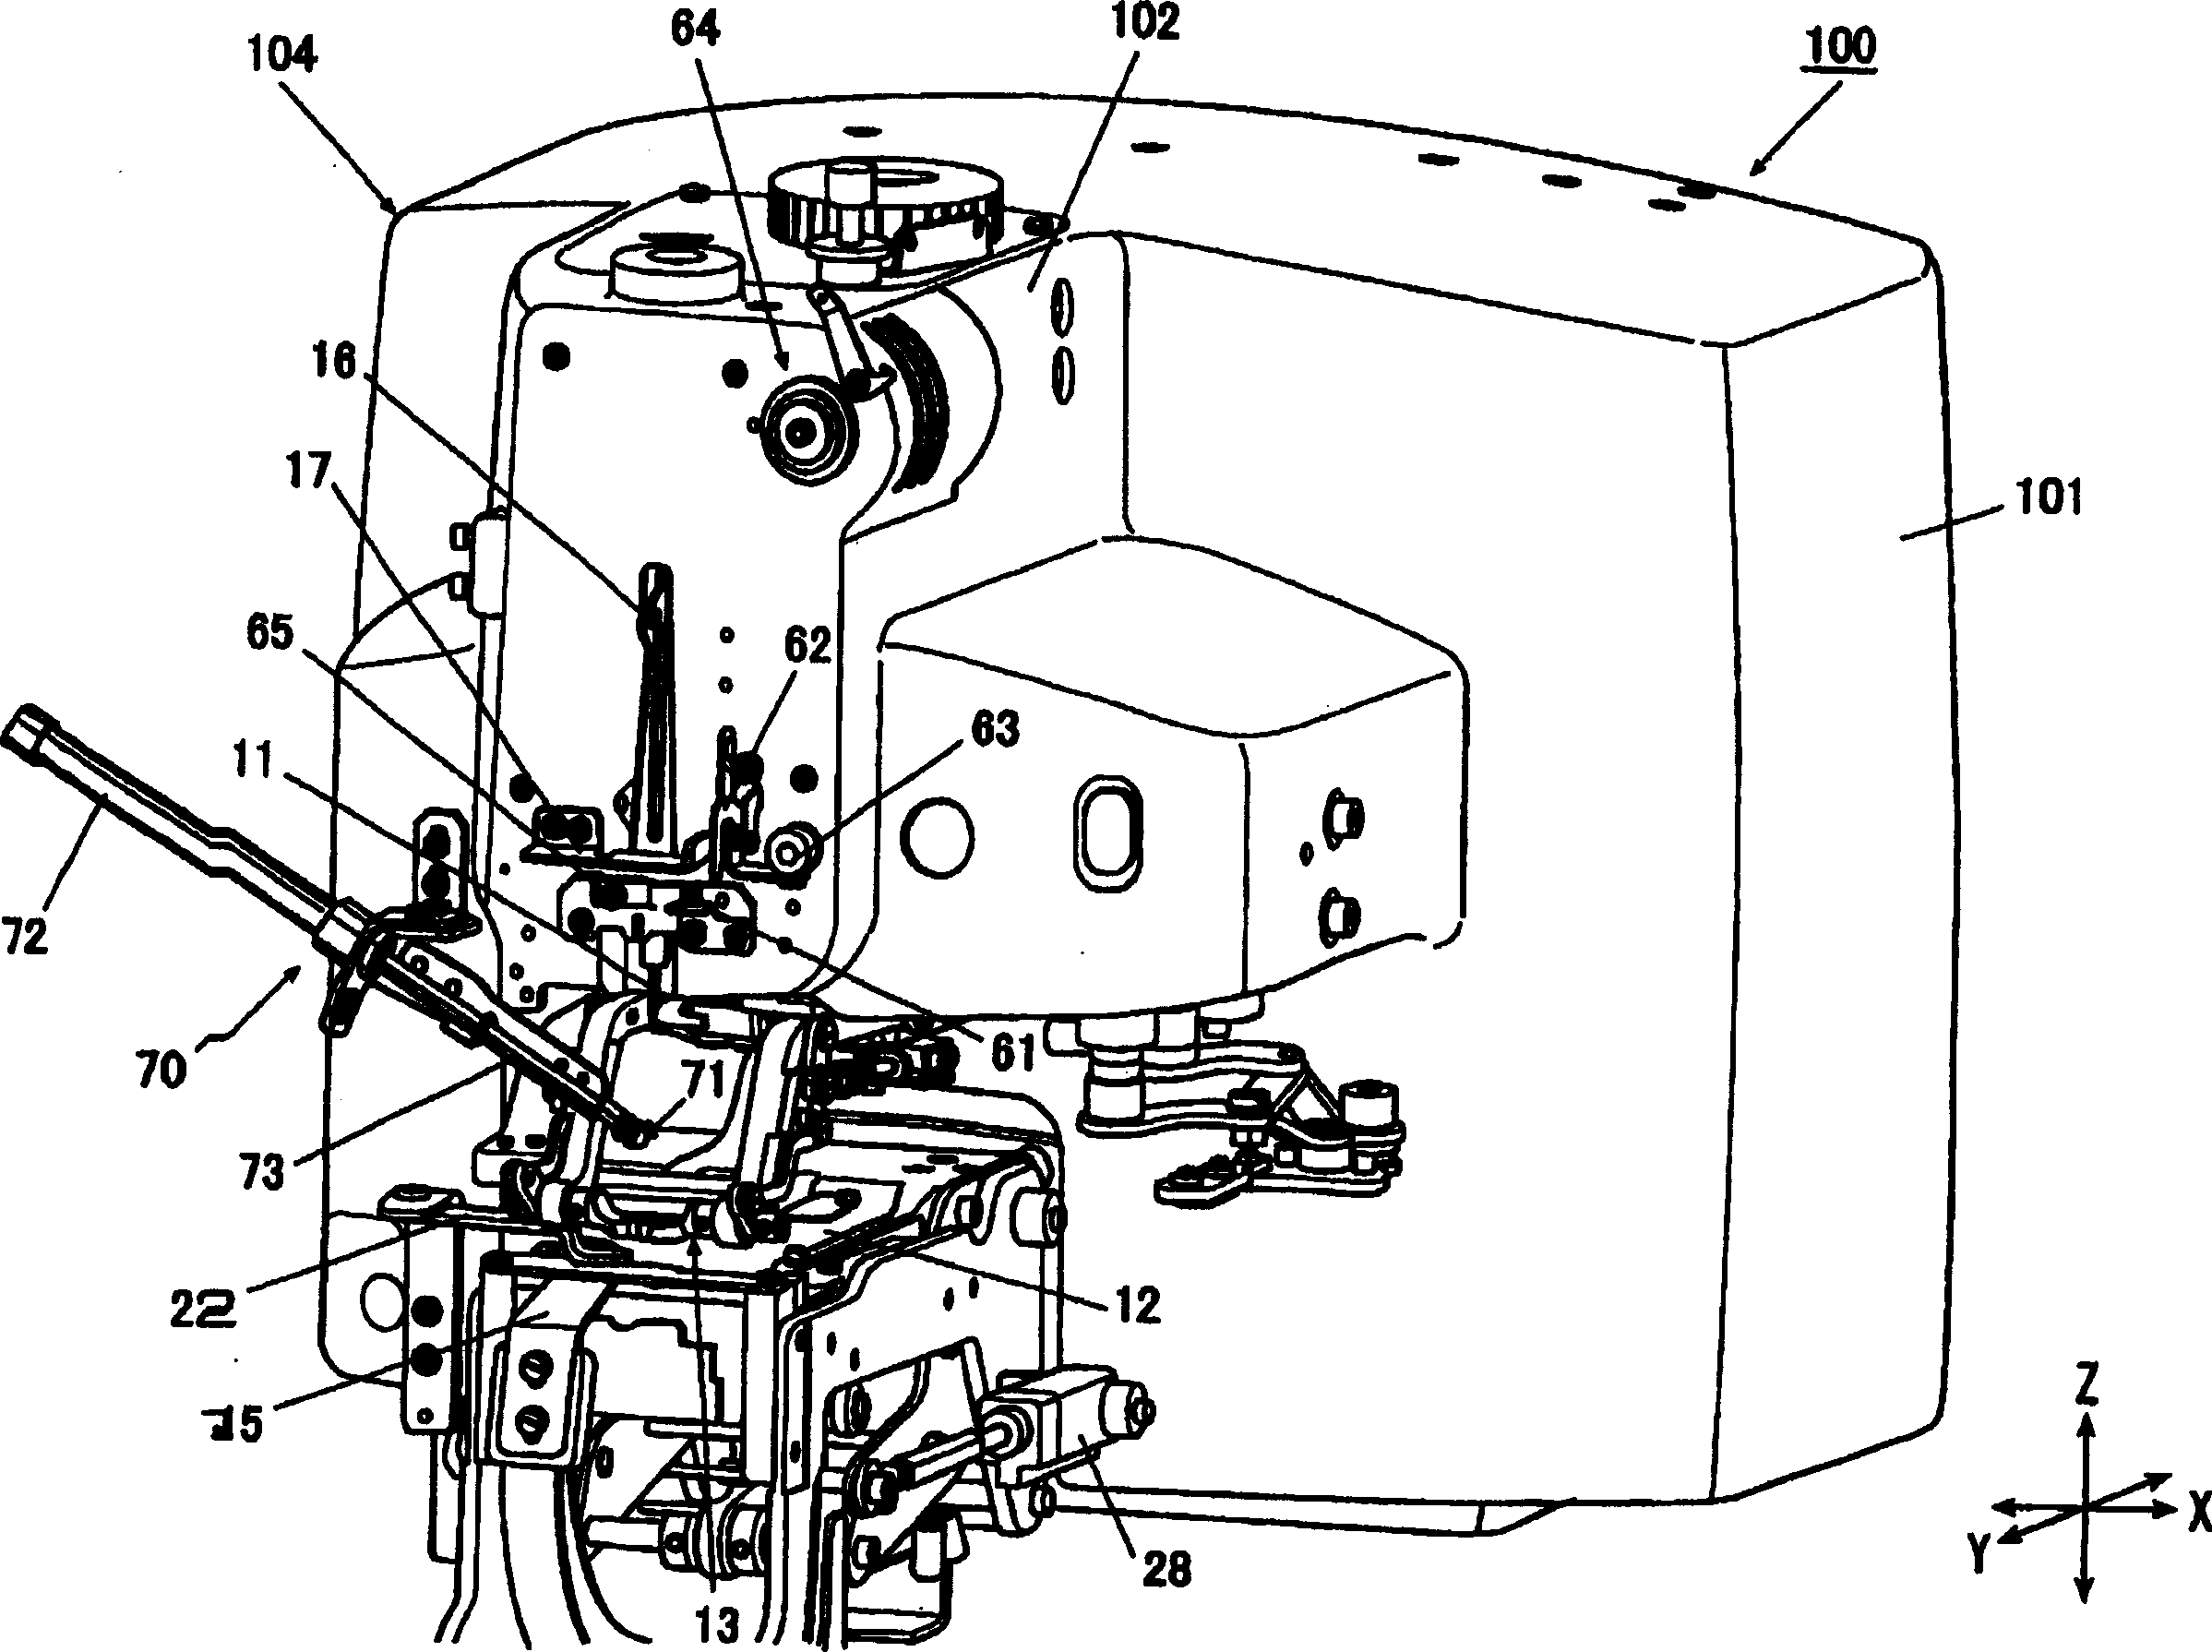 Button-sewing machine